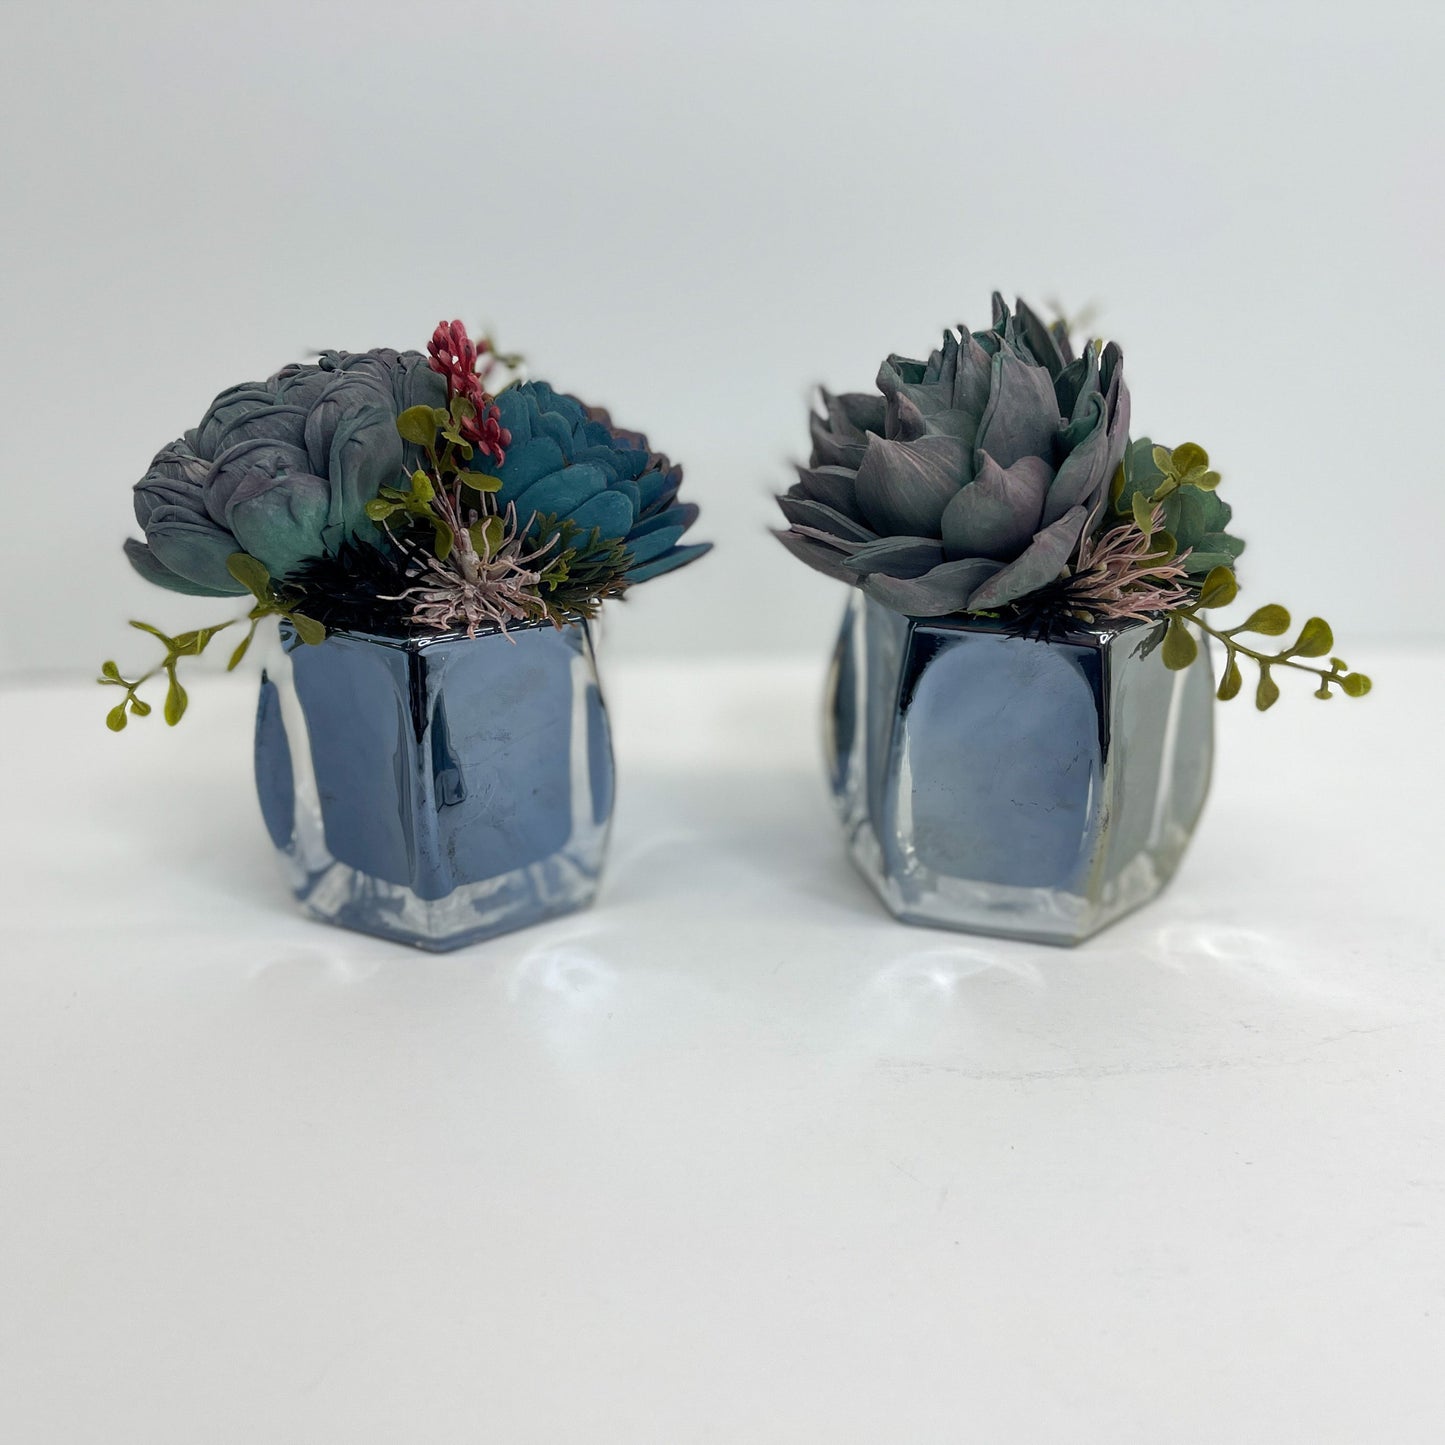 Mini Succulent Garden Set - Mirror Black Glass